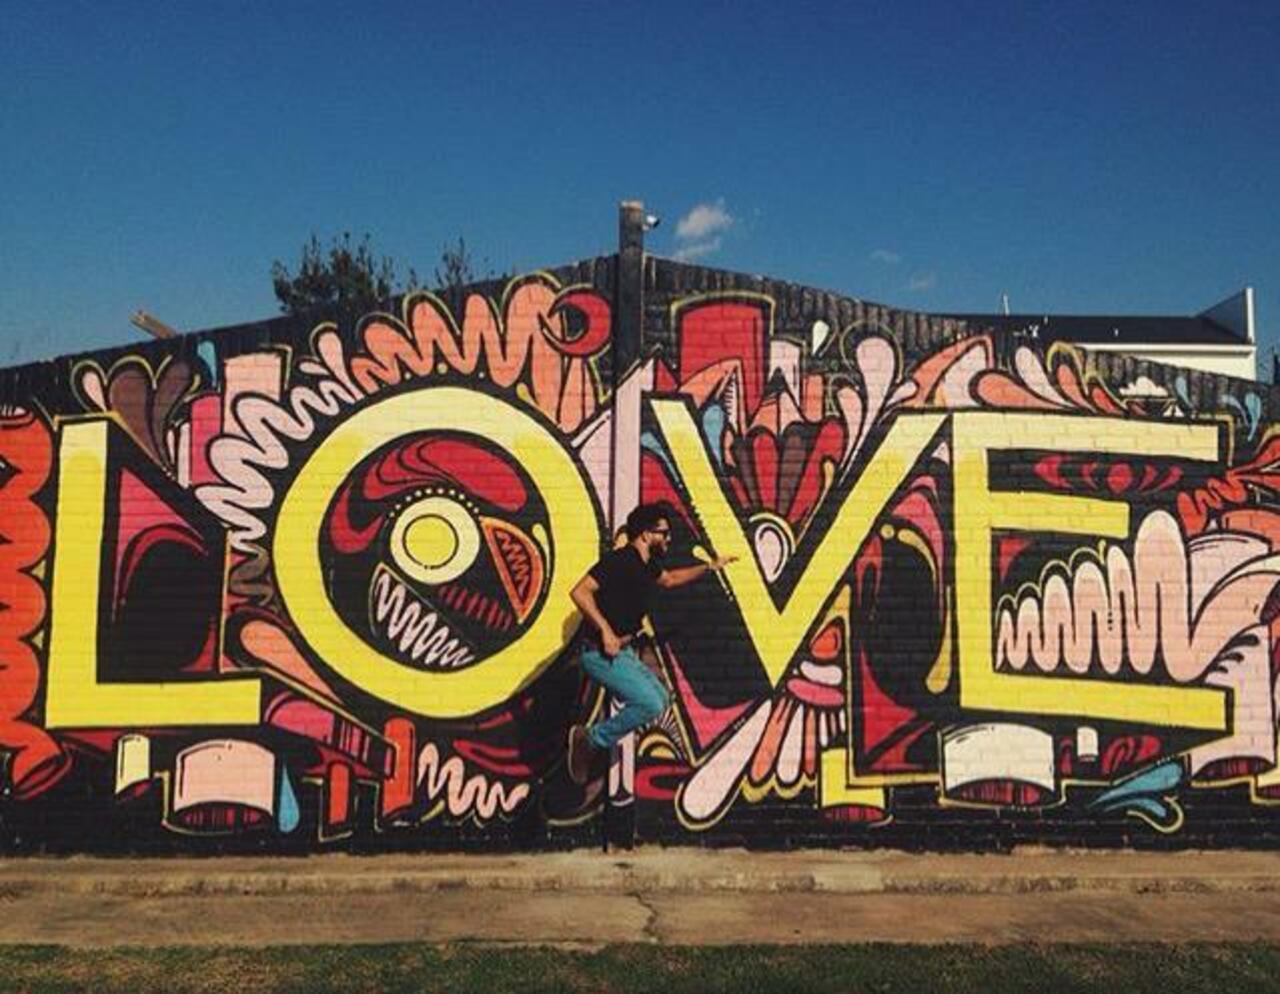 RT @Rabeliouus: RT @GoogleStreetArt: Love ❤️
Street Art by WileyArt

#art #graffiti #mural #streetart http://t.co/8FsrrzNDZv